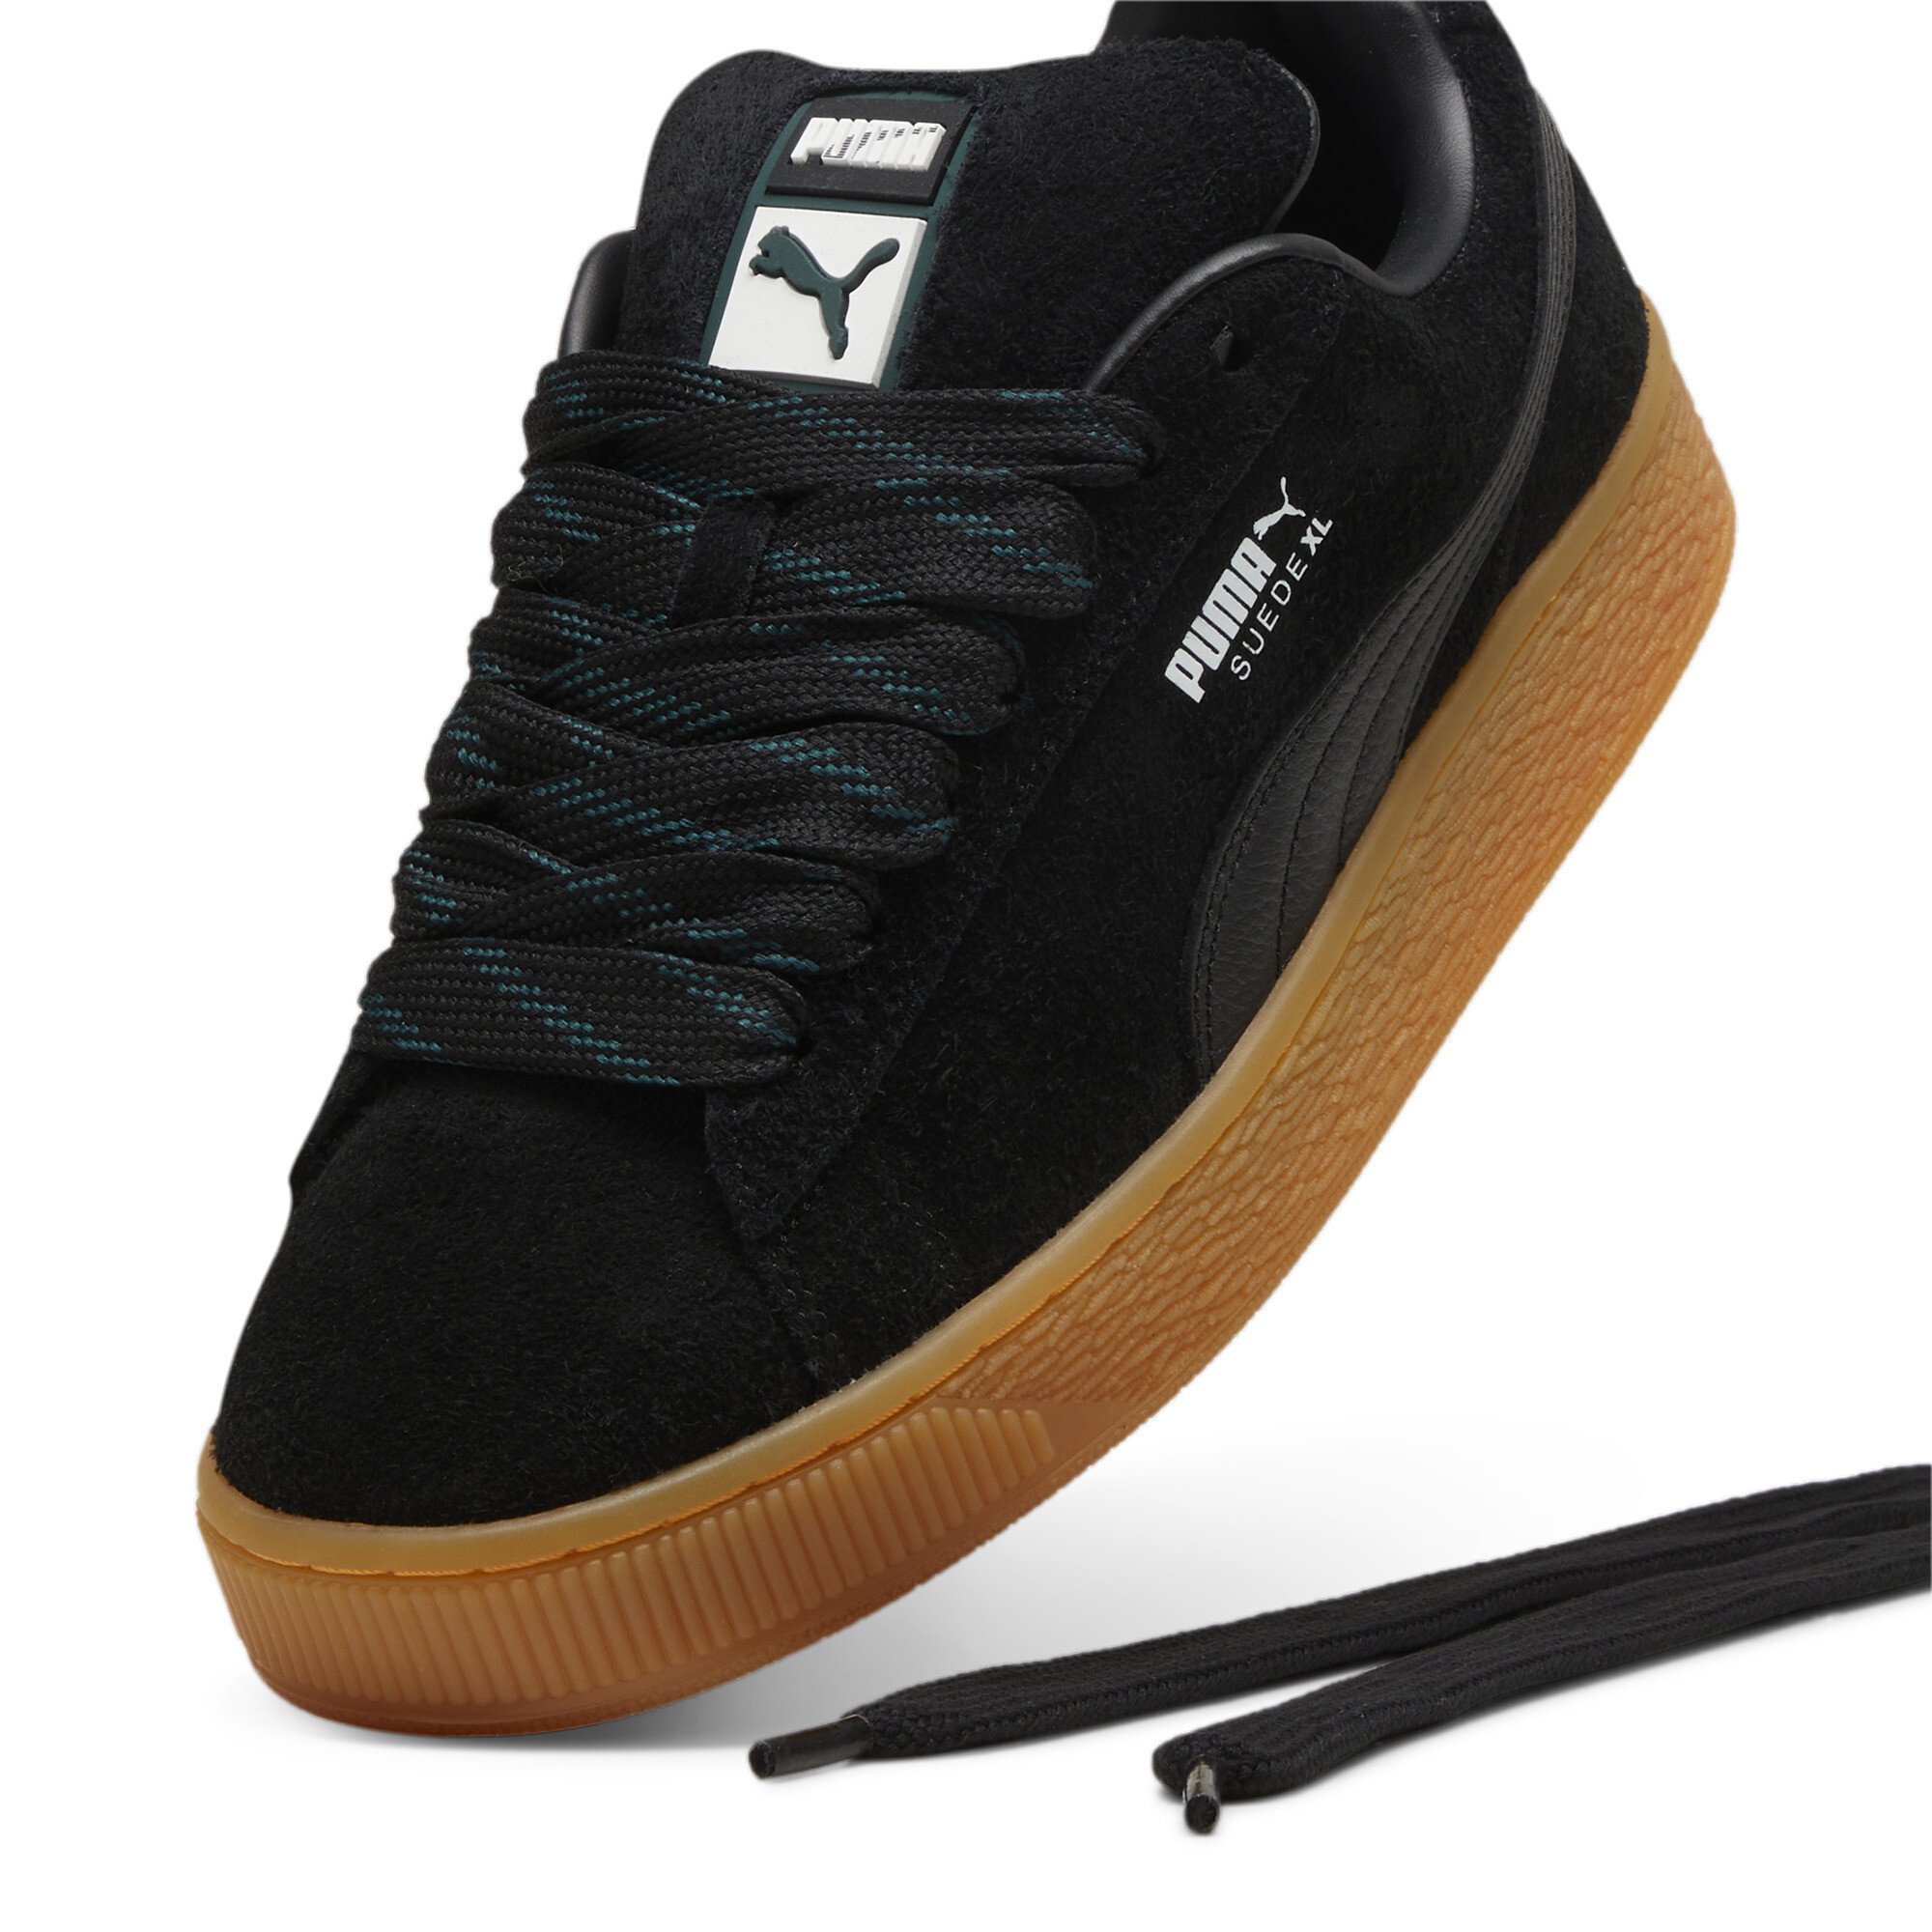 Puma Suede XL Flecked Unisex, Black, Size 35.5, Shoes